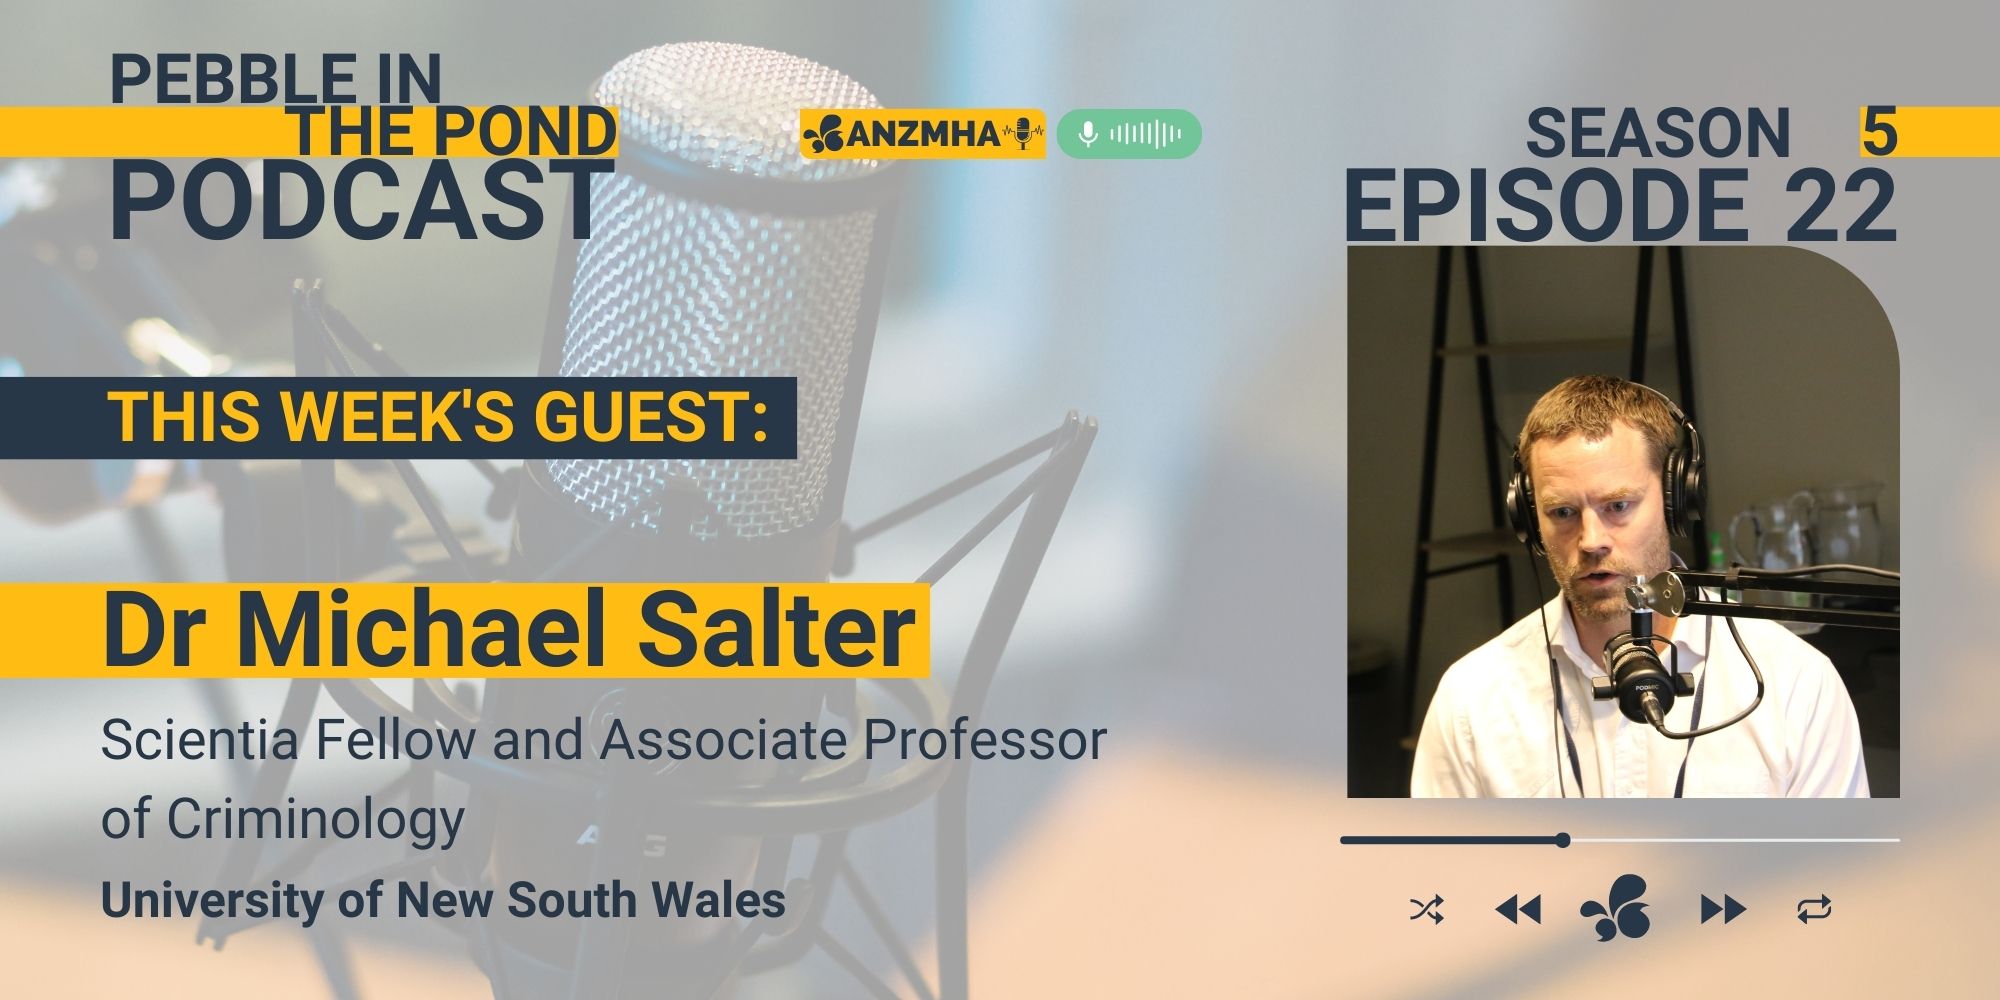 ANZMHA Podcast: Dr Michael Salter